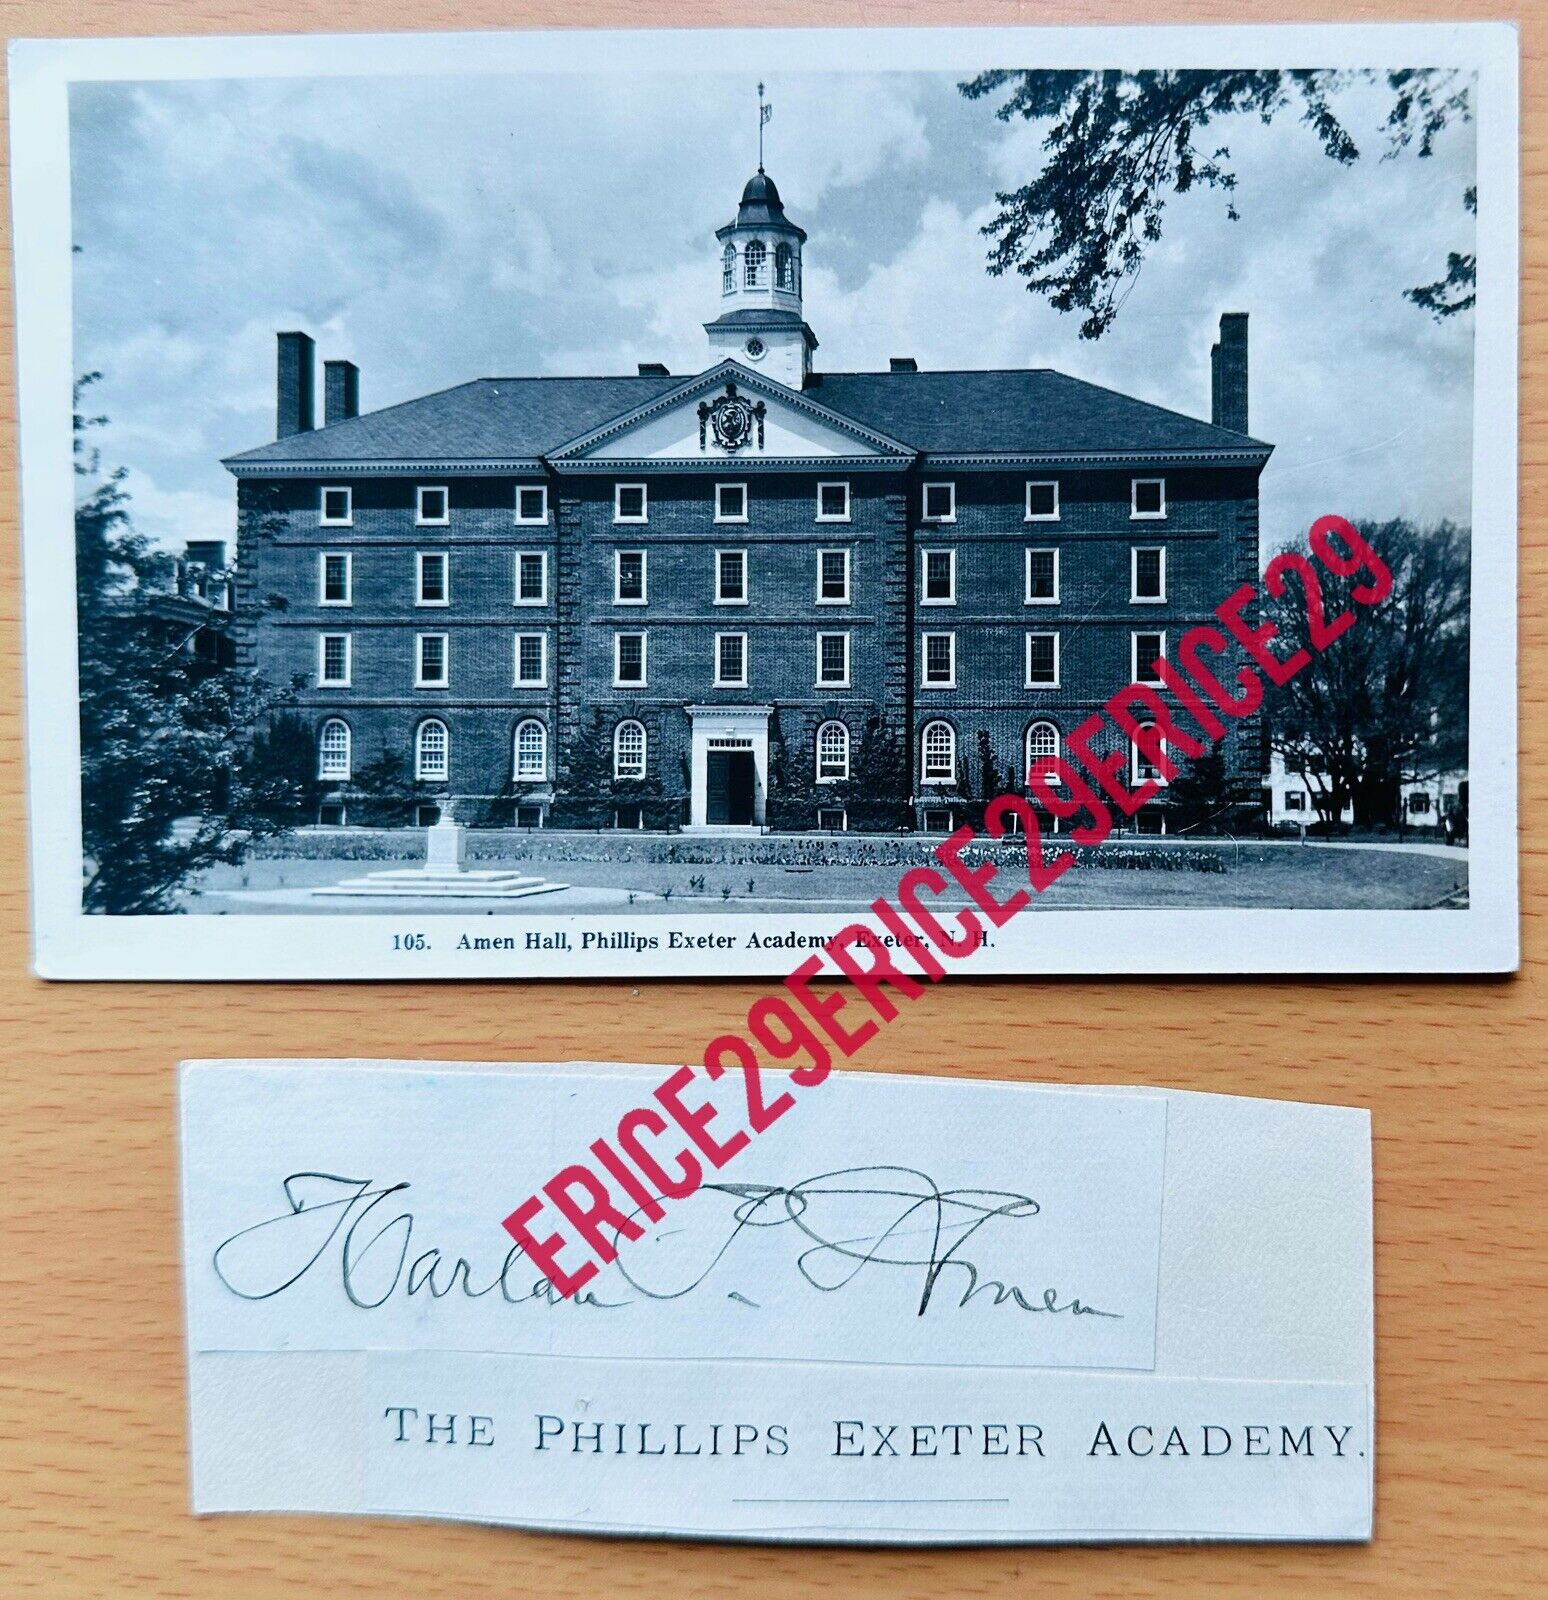 Harlan P. Amen SIGNATURE Phillips Exeter Academy “Amen Hall” Principal 1895–1913